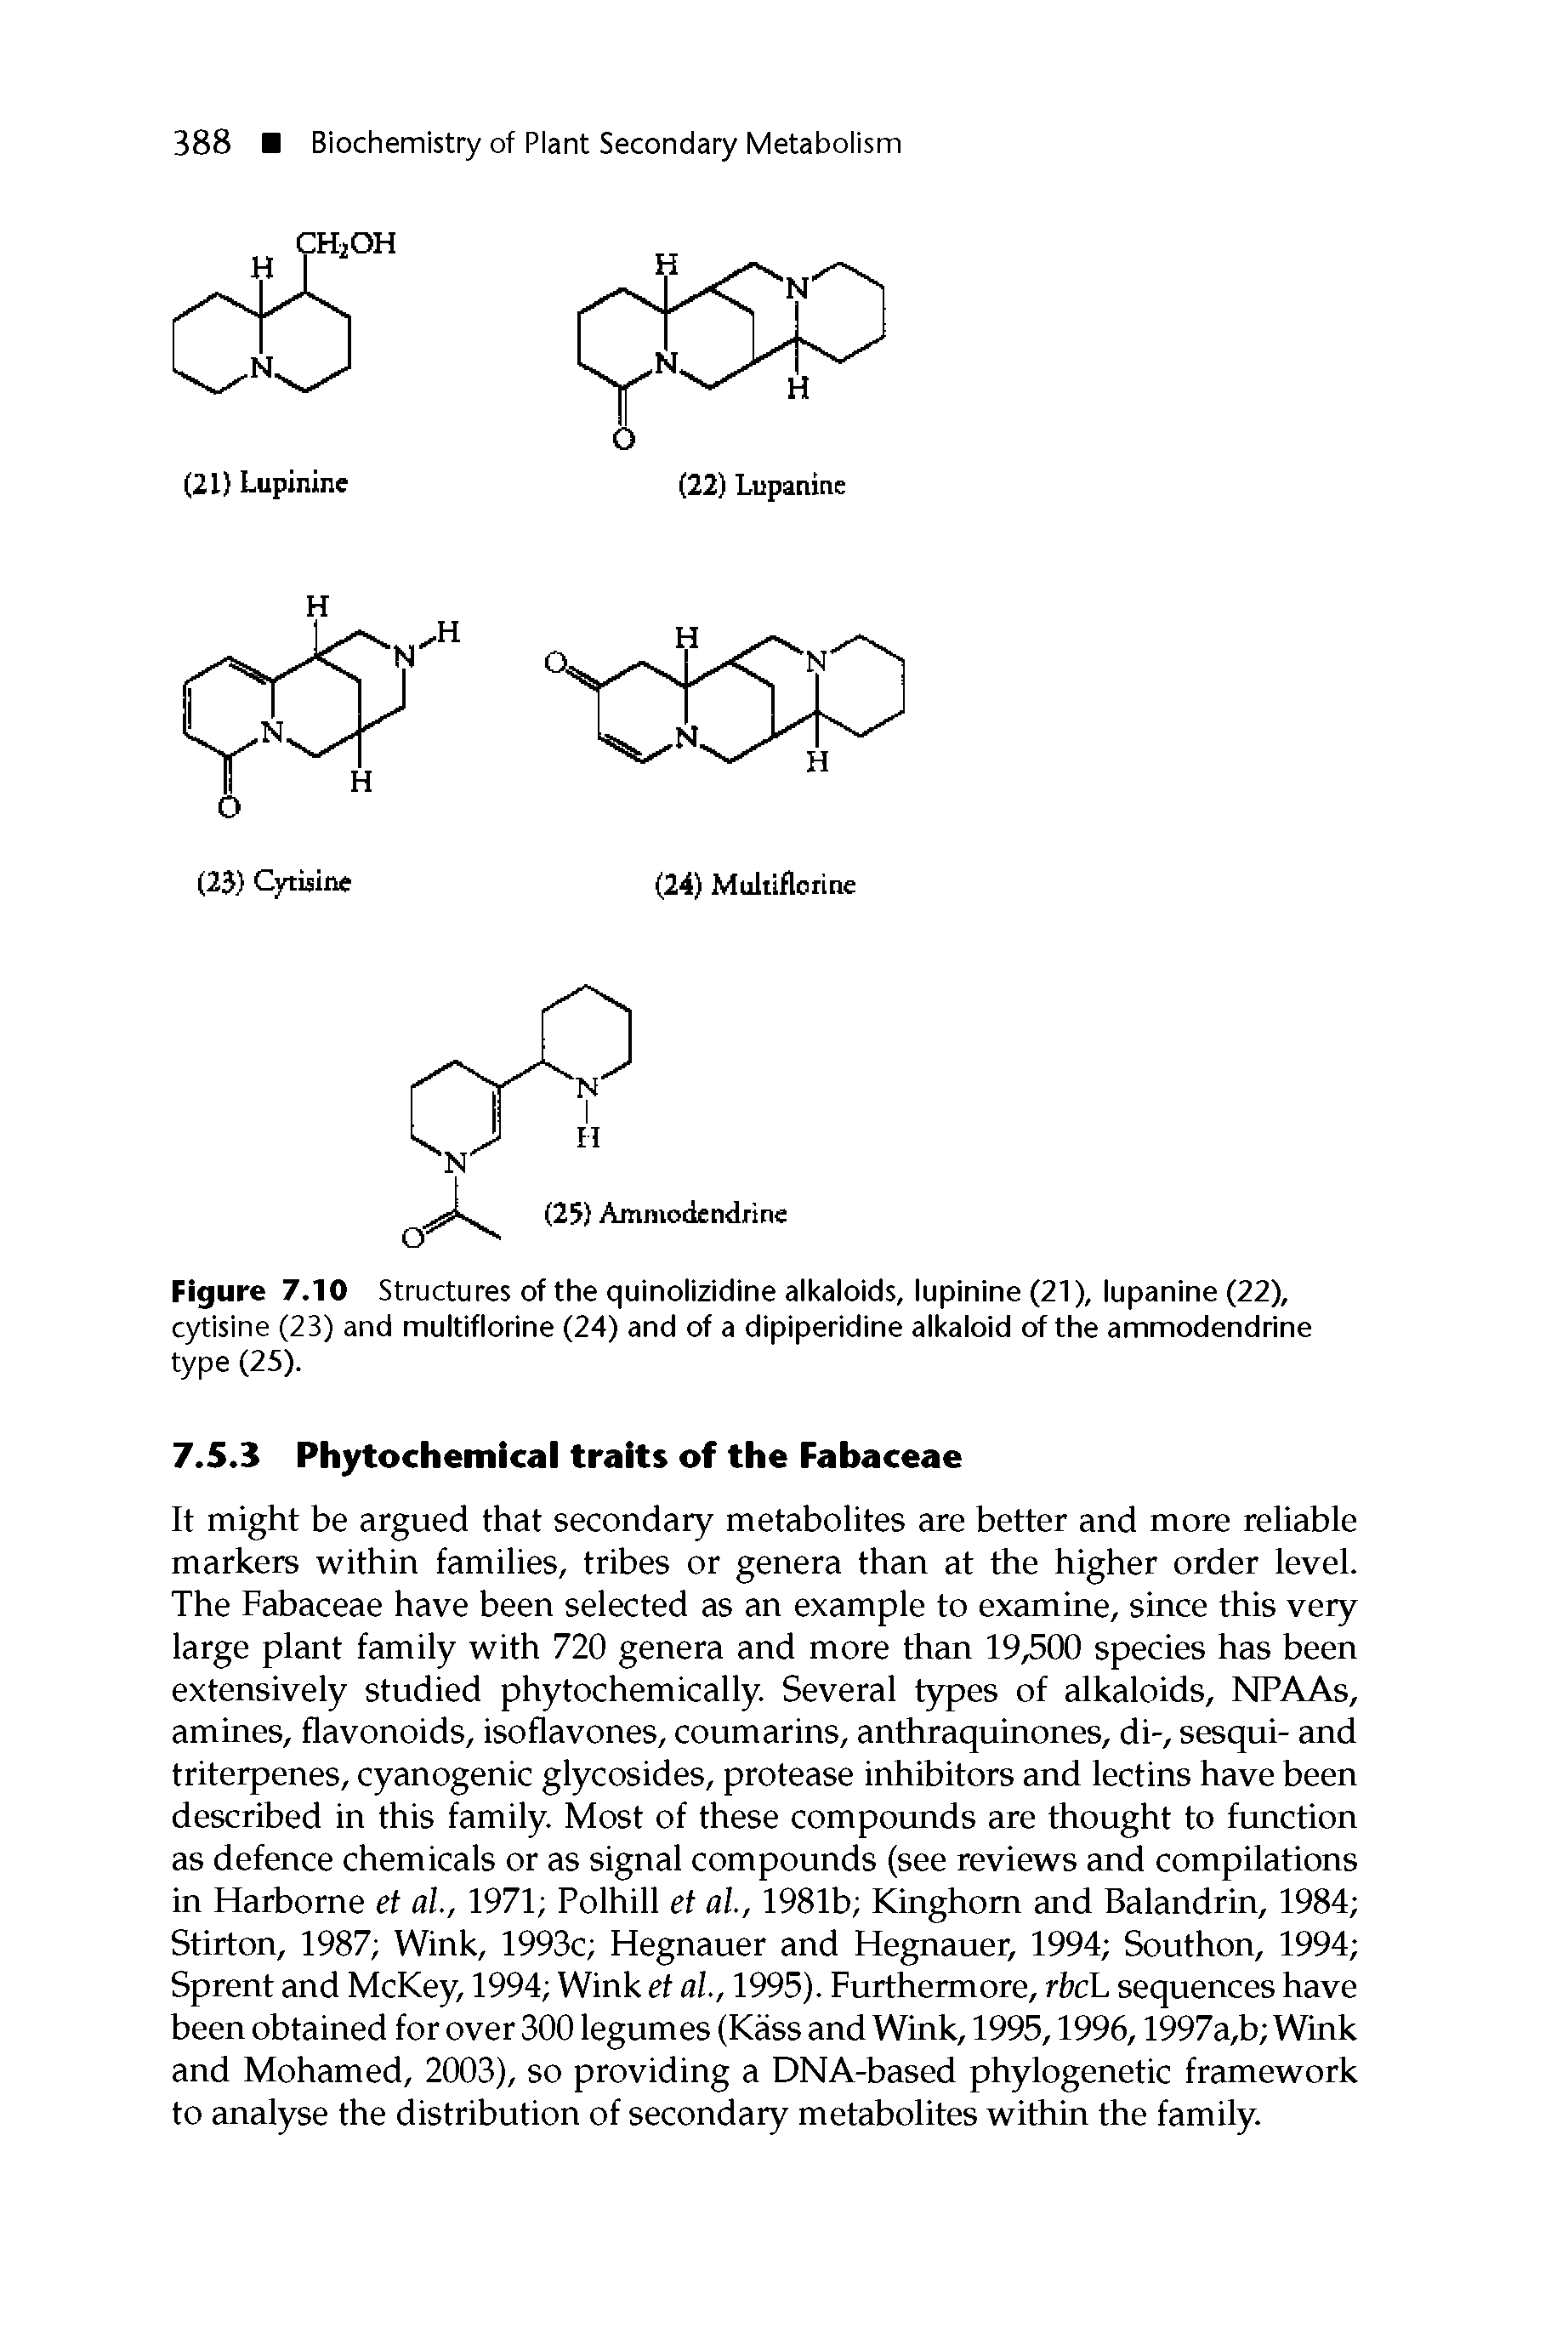 Figure 7.10 Structures of the quinolizidine alkaloids, lupinine (21), lupanine (22), cytisine (23) and multiflorine (24) and of a dipiperidine alkaloid of the ammodendrine type (25).